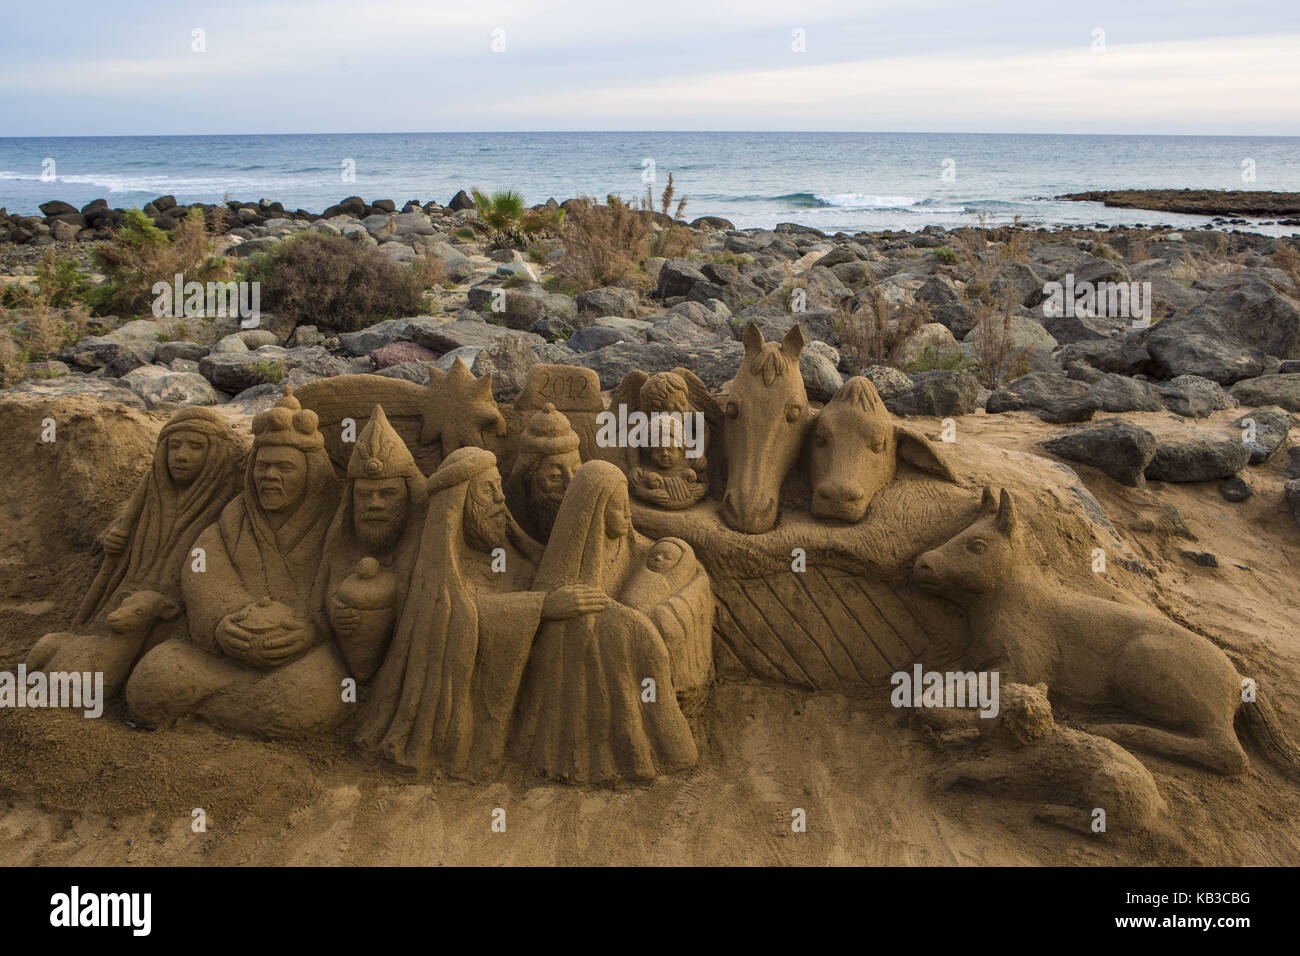 Spain, Canary islands, Gran Canaria, Maspalomas beach, Sand sculpture, creche, Stock Photo